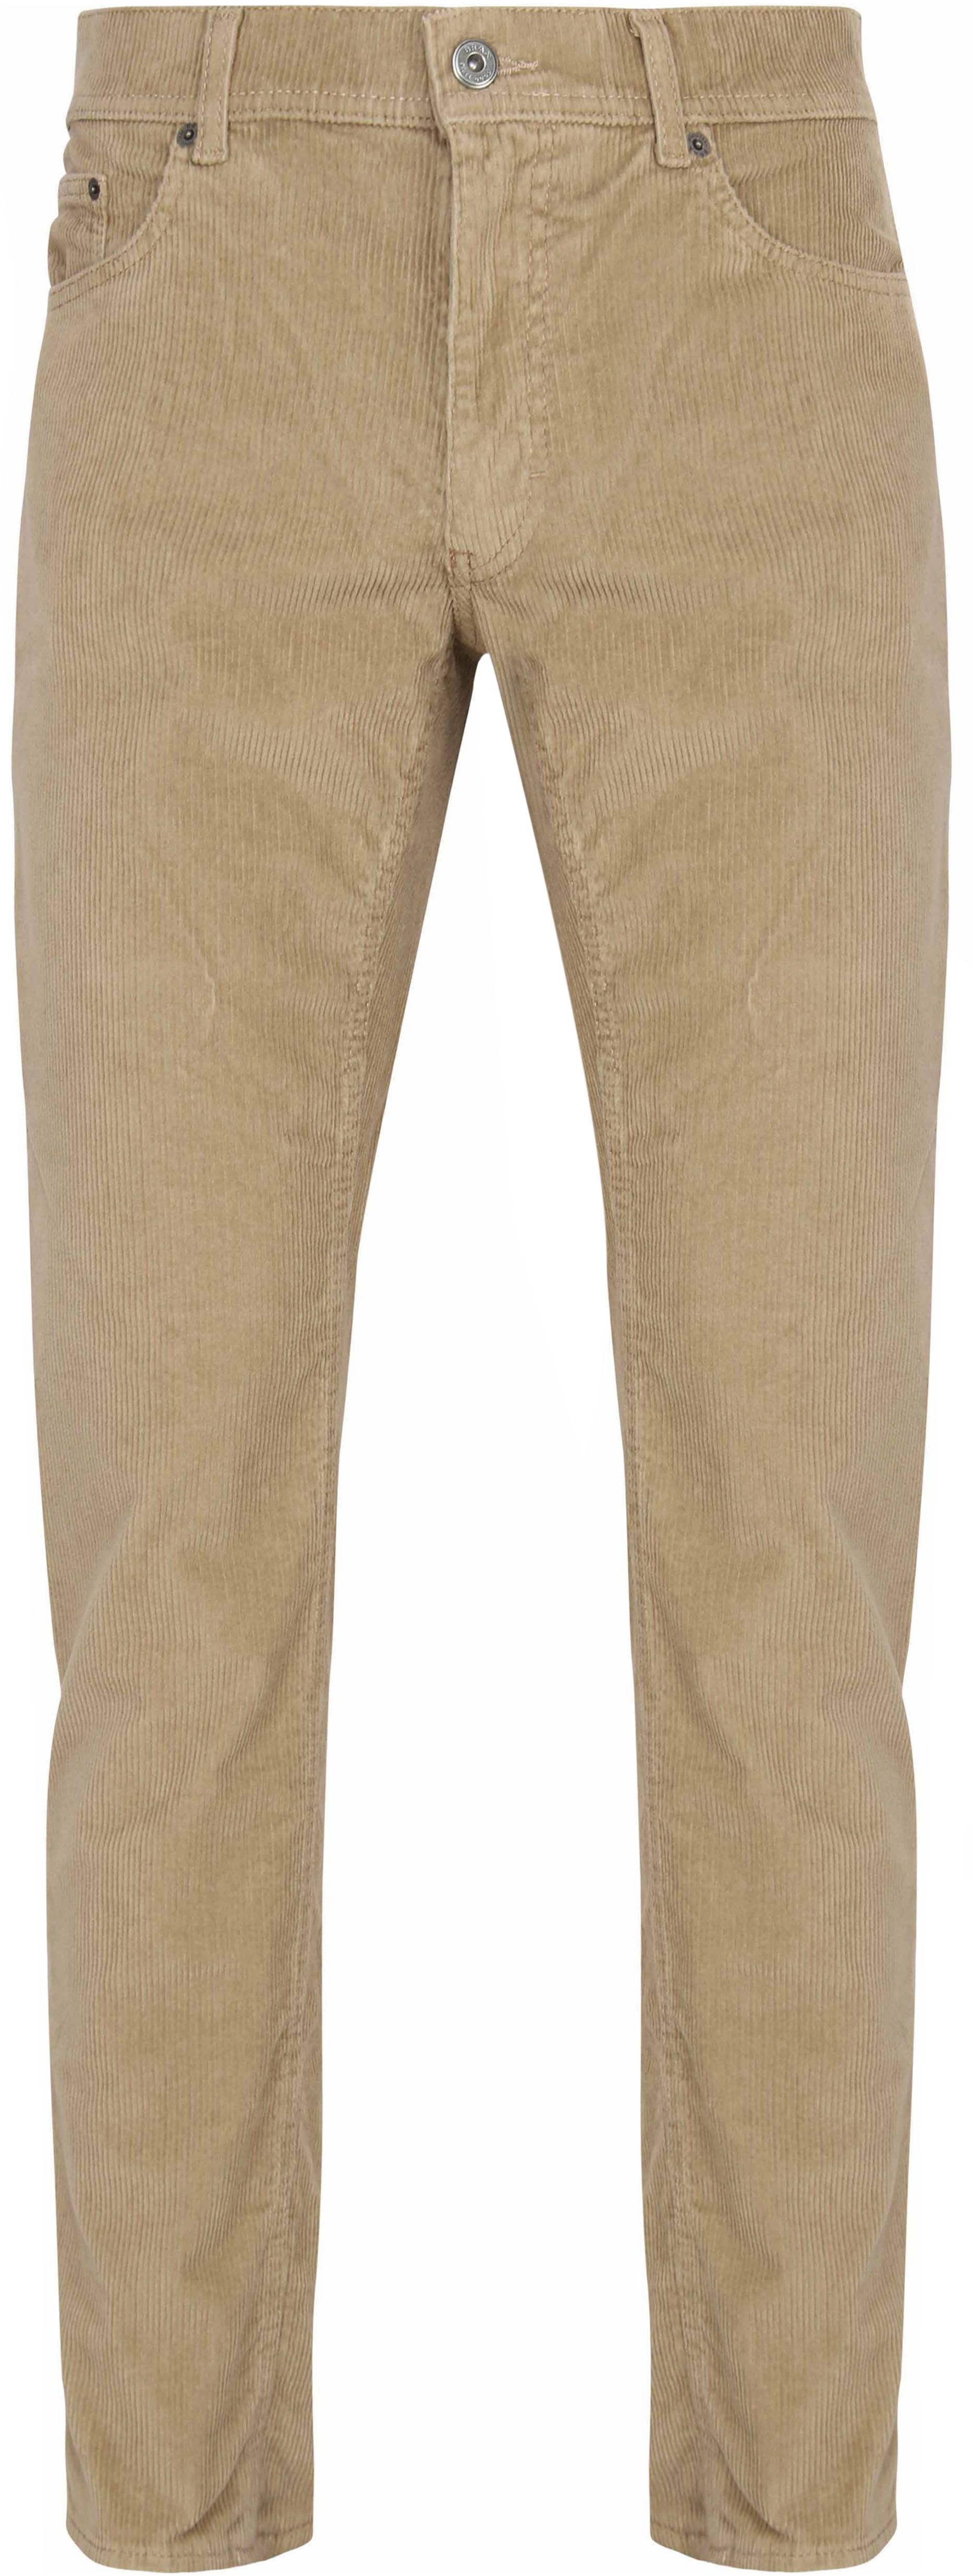 Brax Cooper Trousers Corduroy Beige size W 40